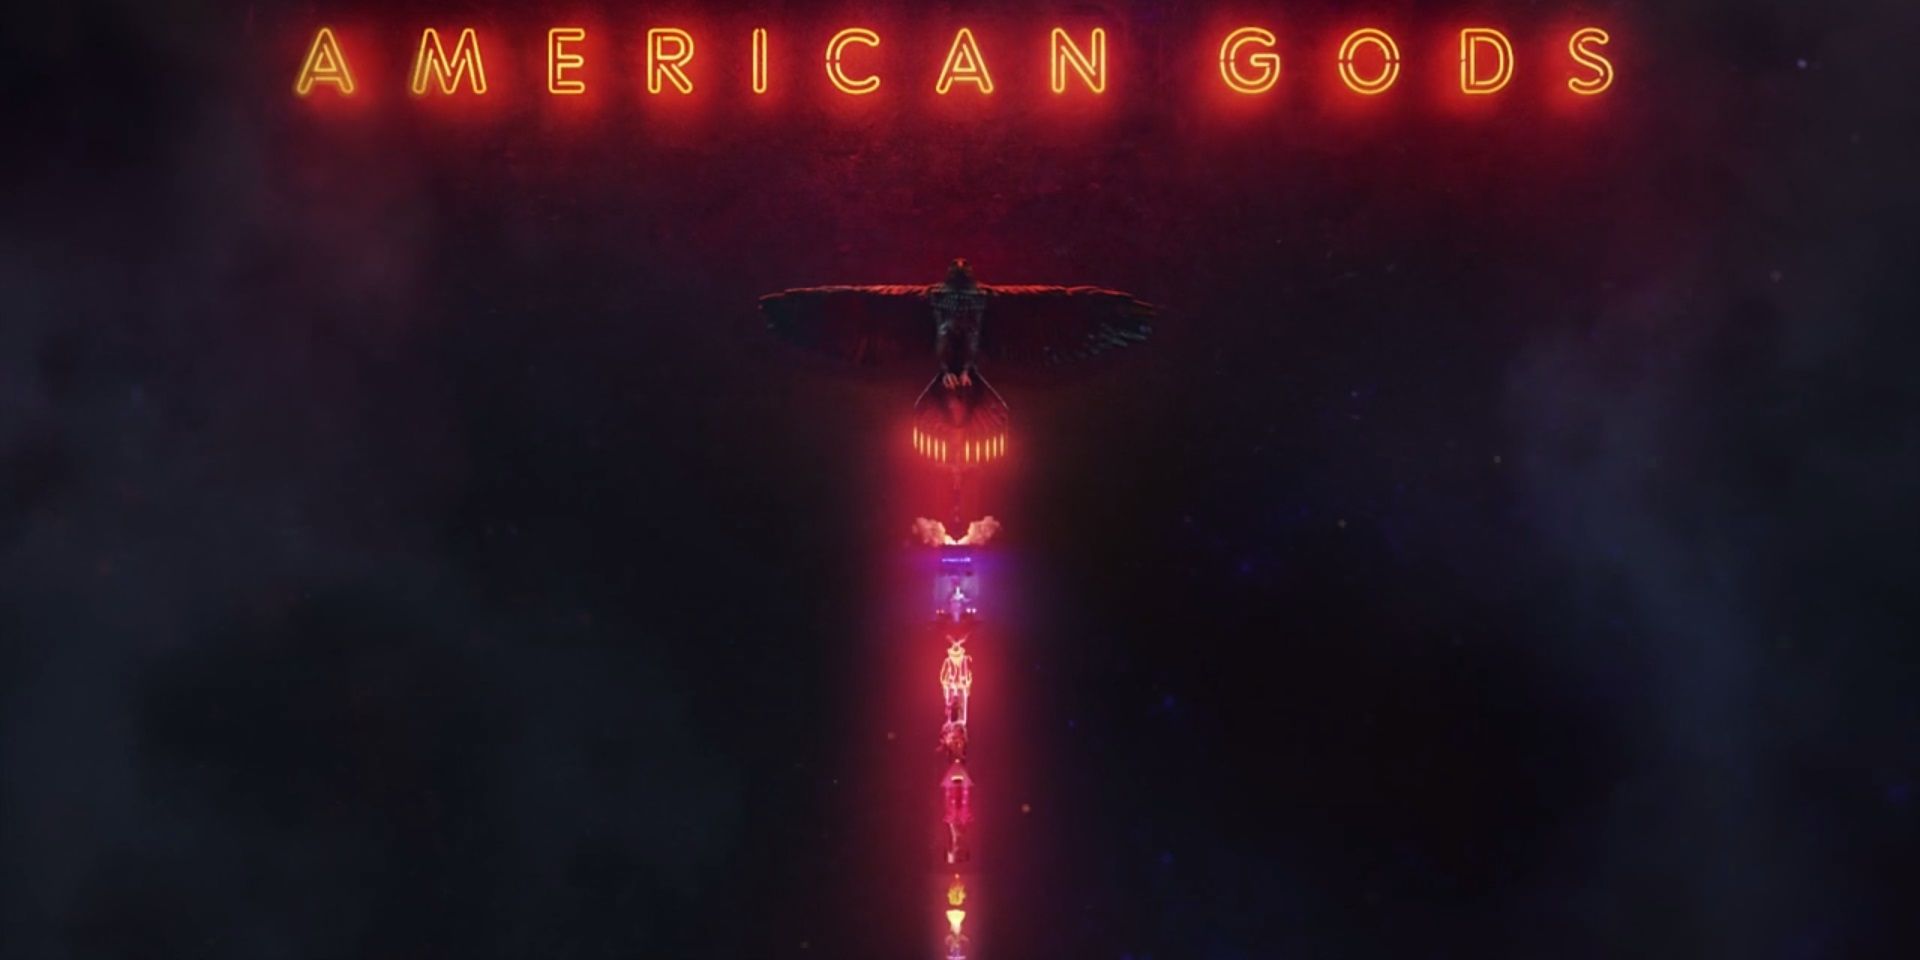 American Gods - Title